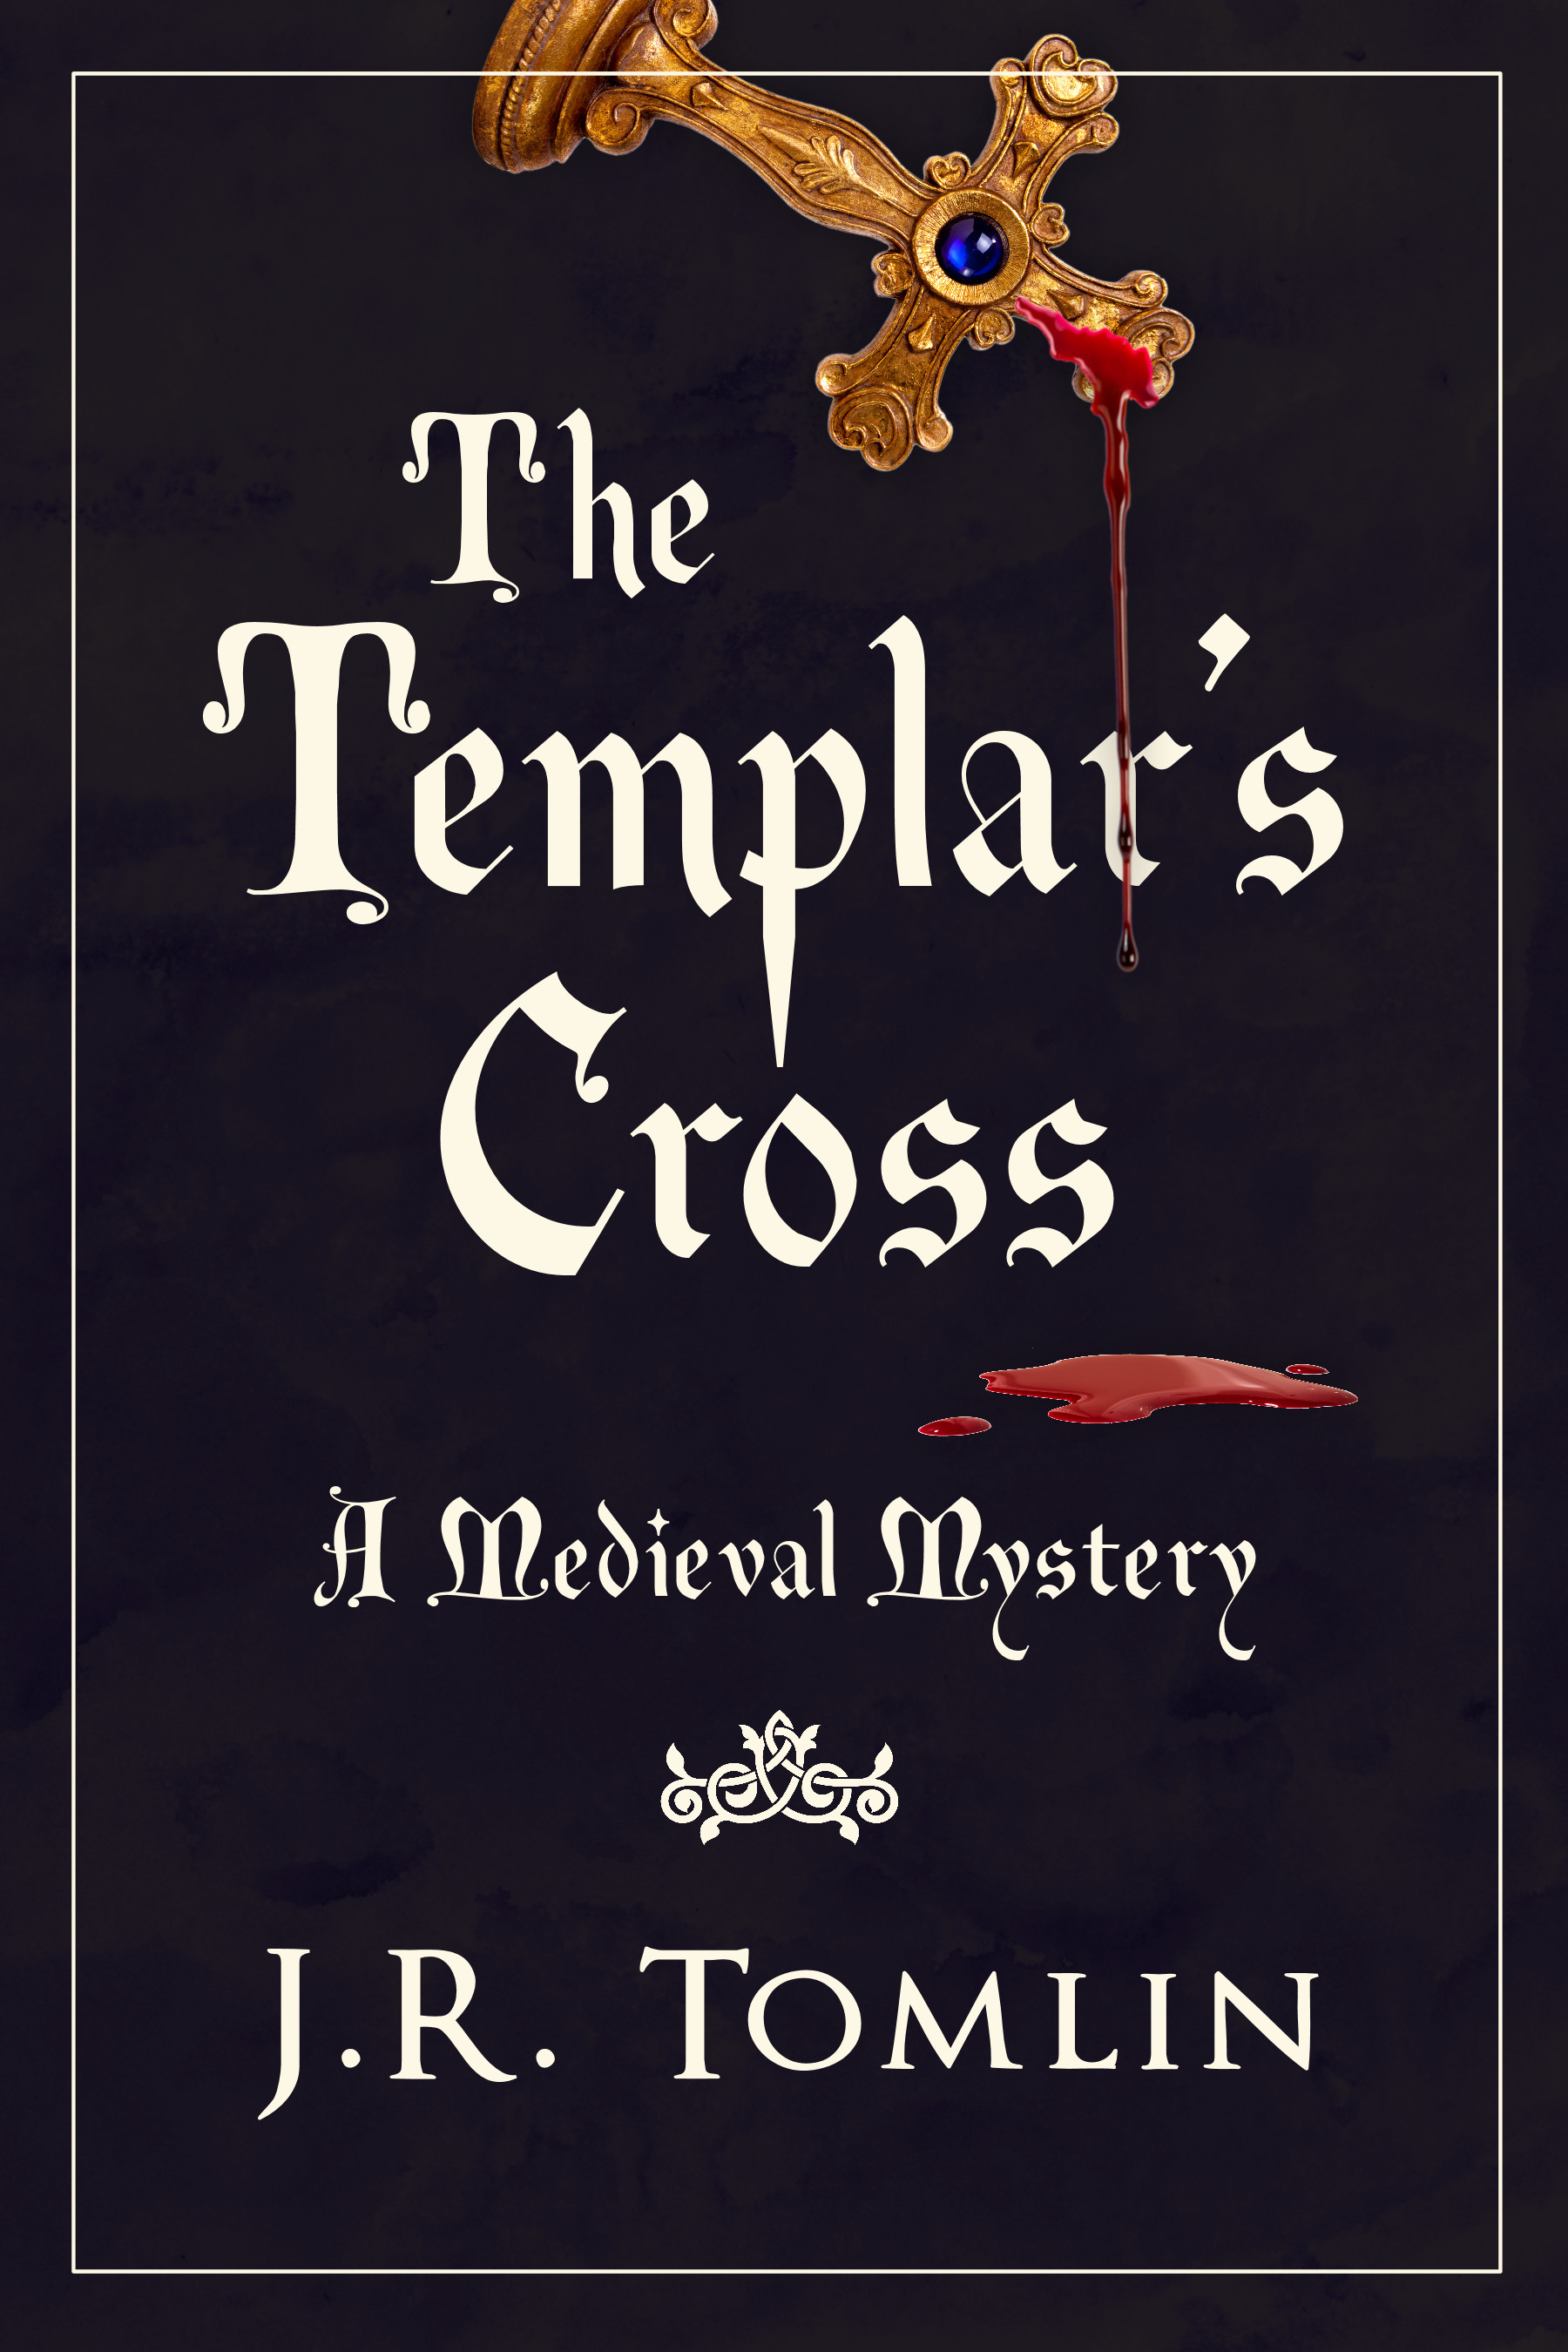 The Templar's Cross